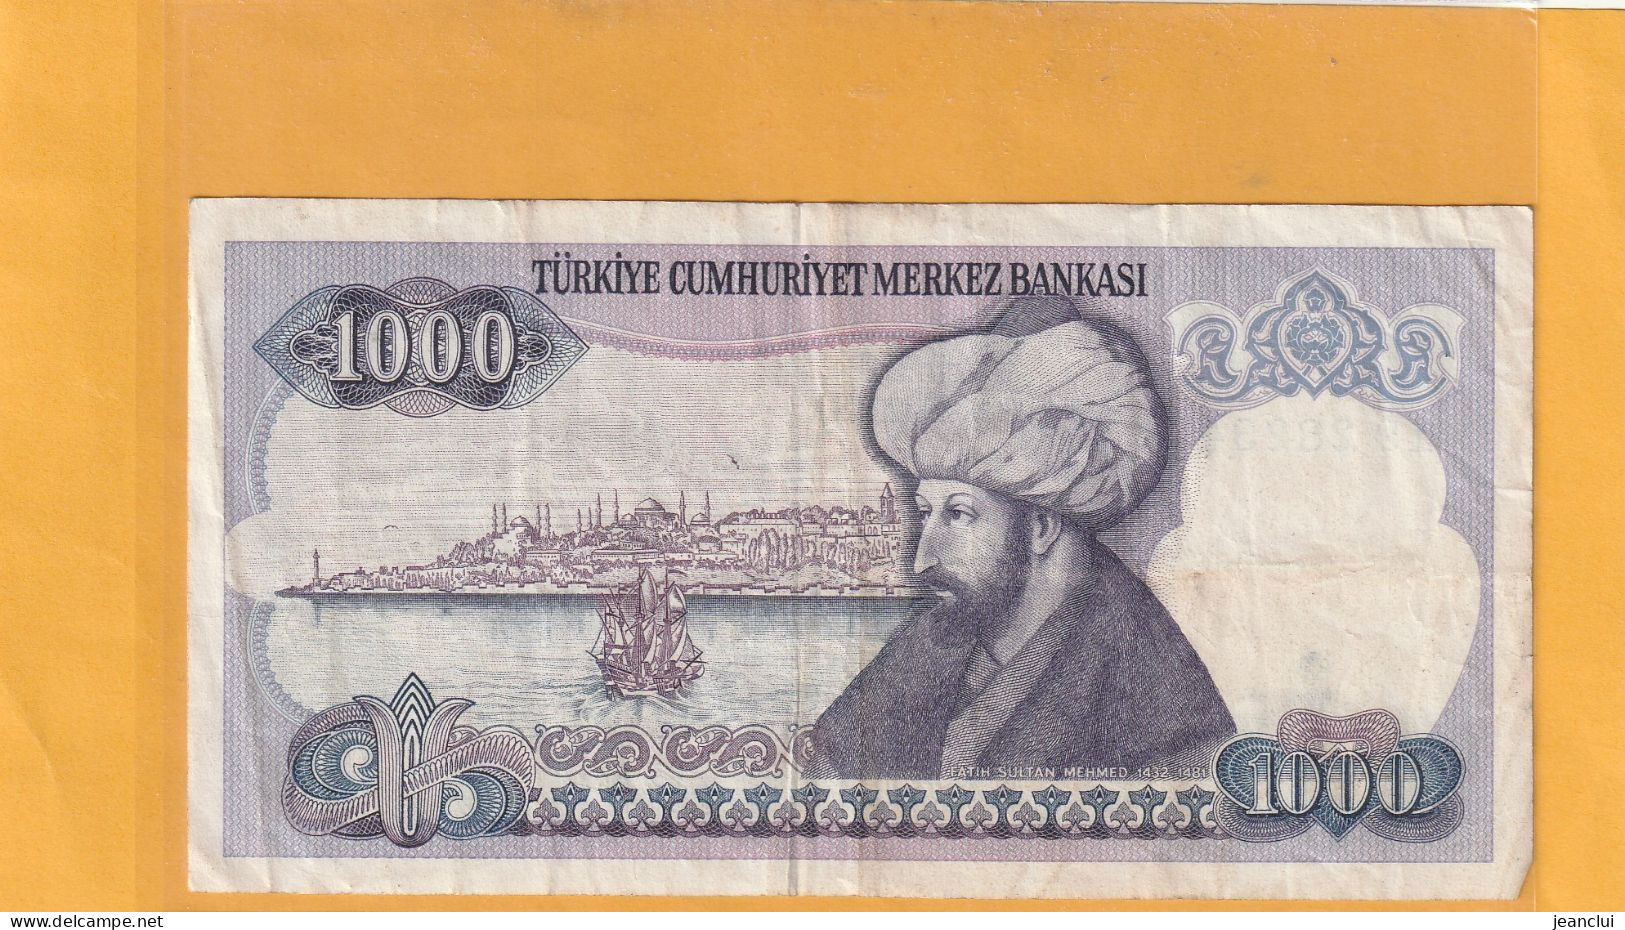 TURKIYE CUMHURIYET MERKEZ BANKASI . 1.000 LIRA . 14 OCAK 1970  . N°  A19 282347 .  2 SCANNES  .  BILLET USITE - Turkije